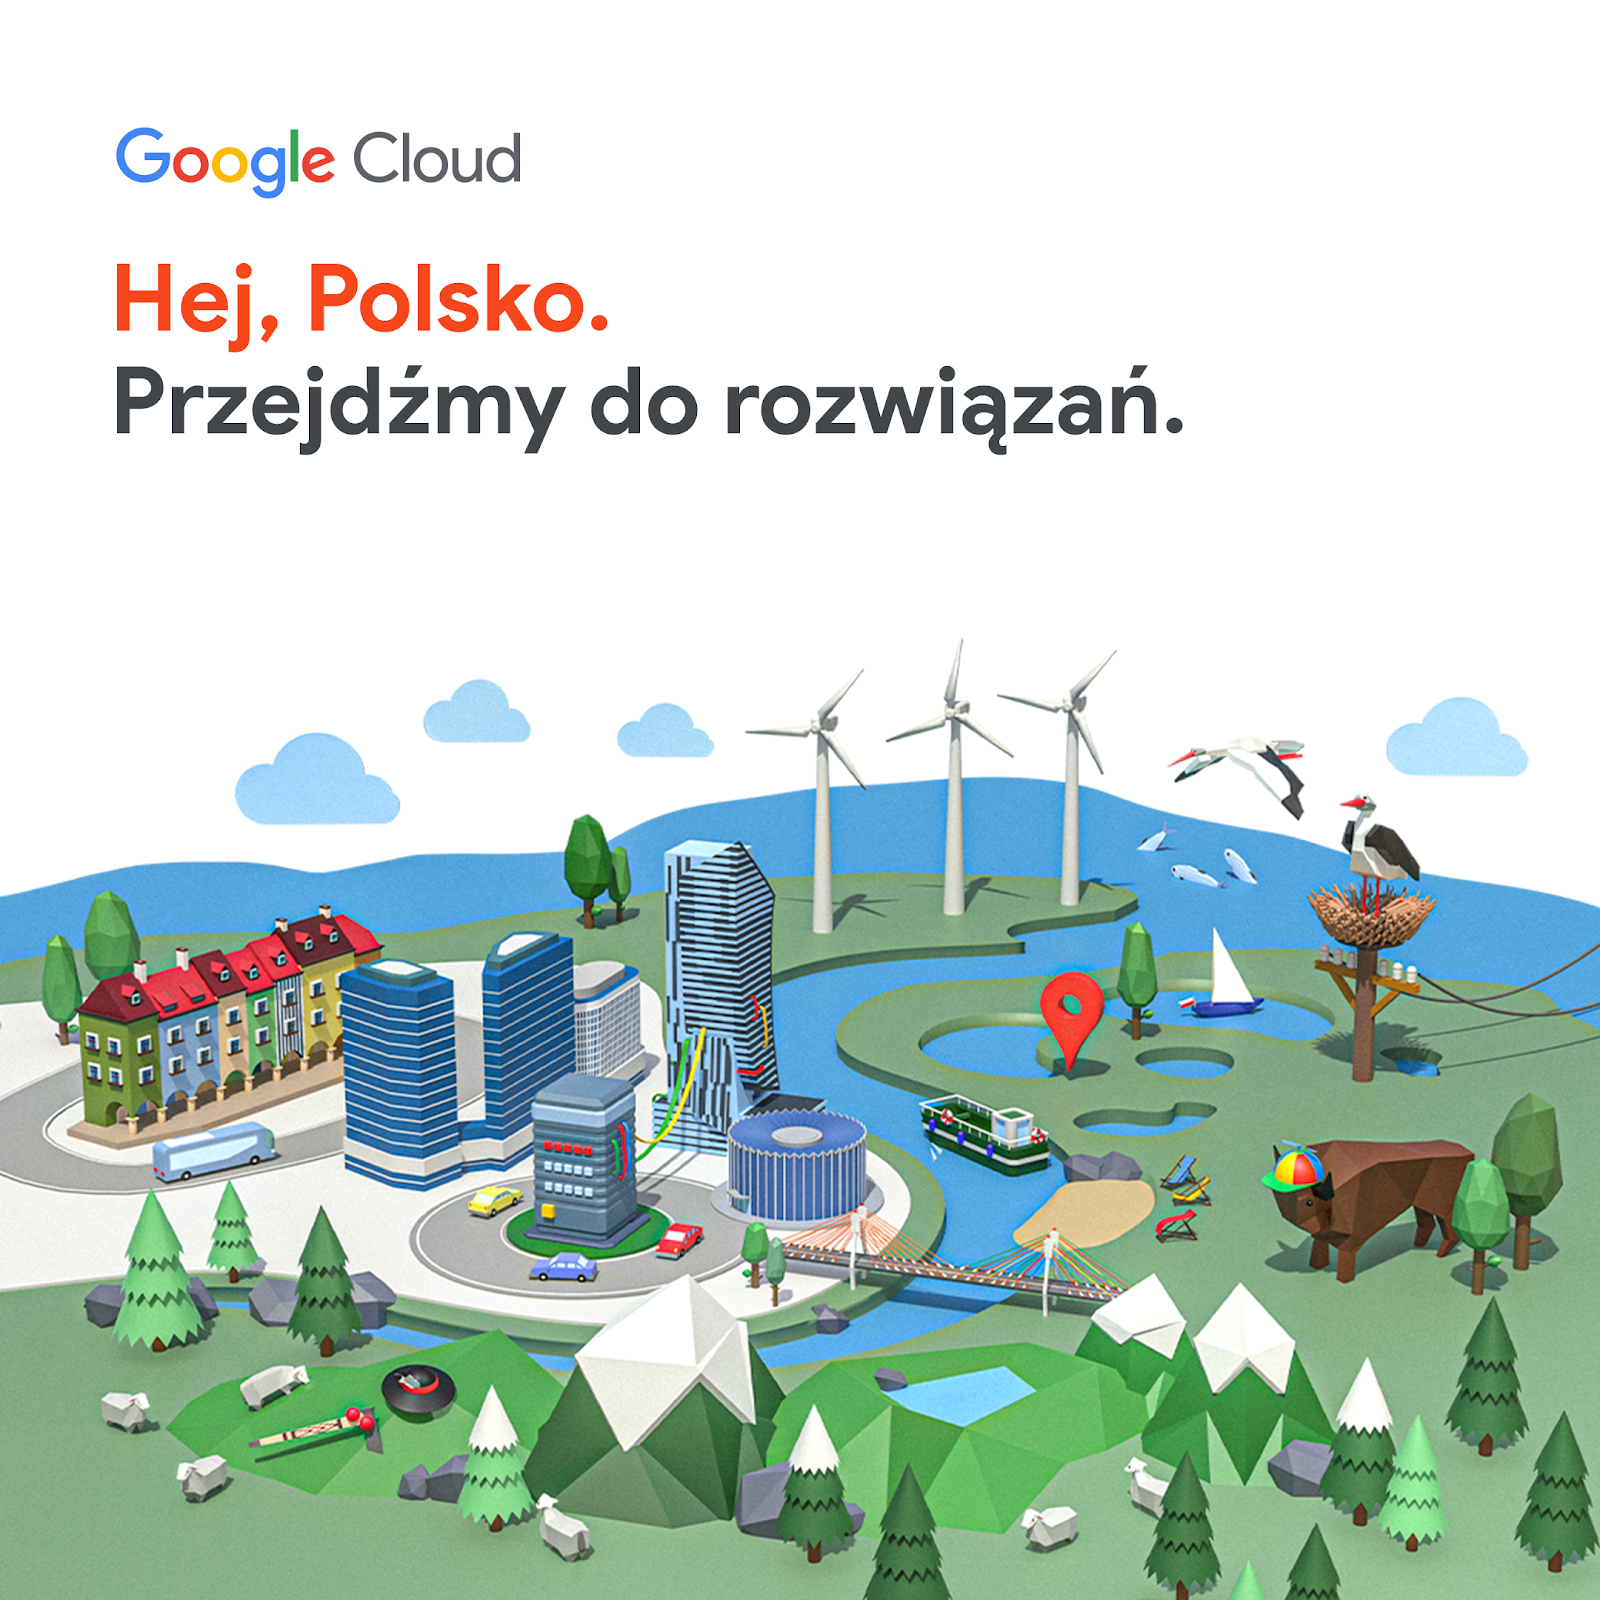 Copy of Google_Cloud_Warsaw_concept2_static_1x1